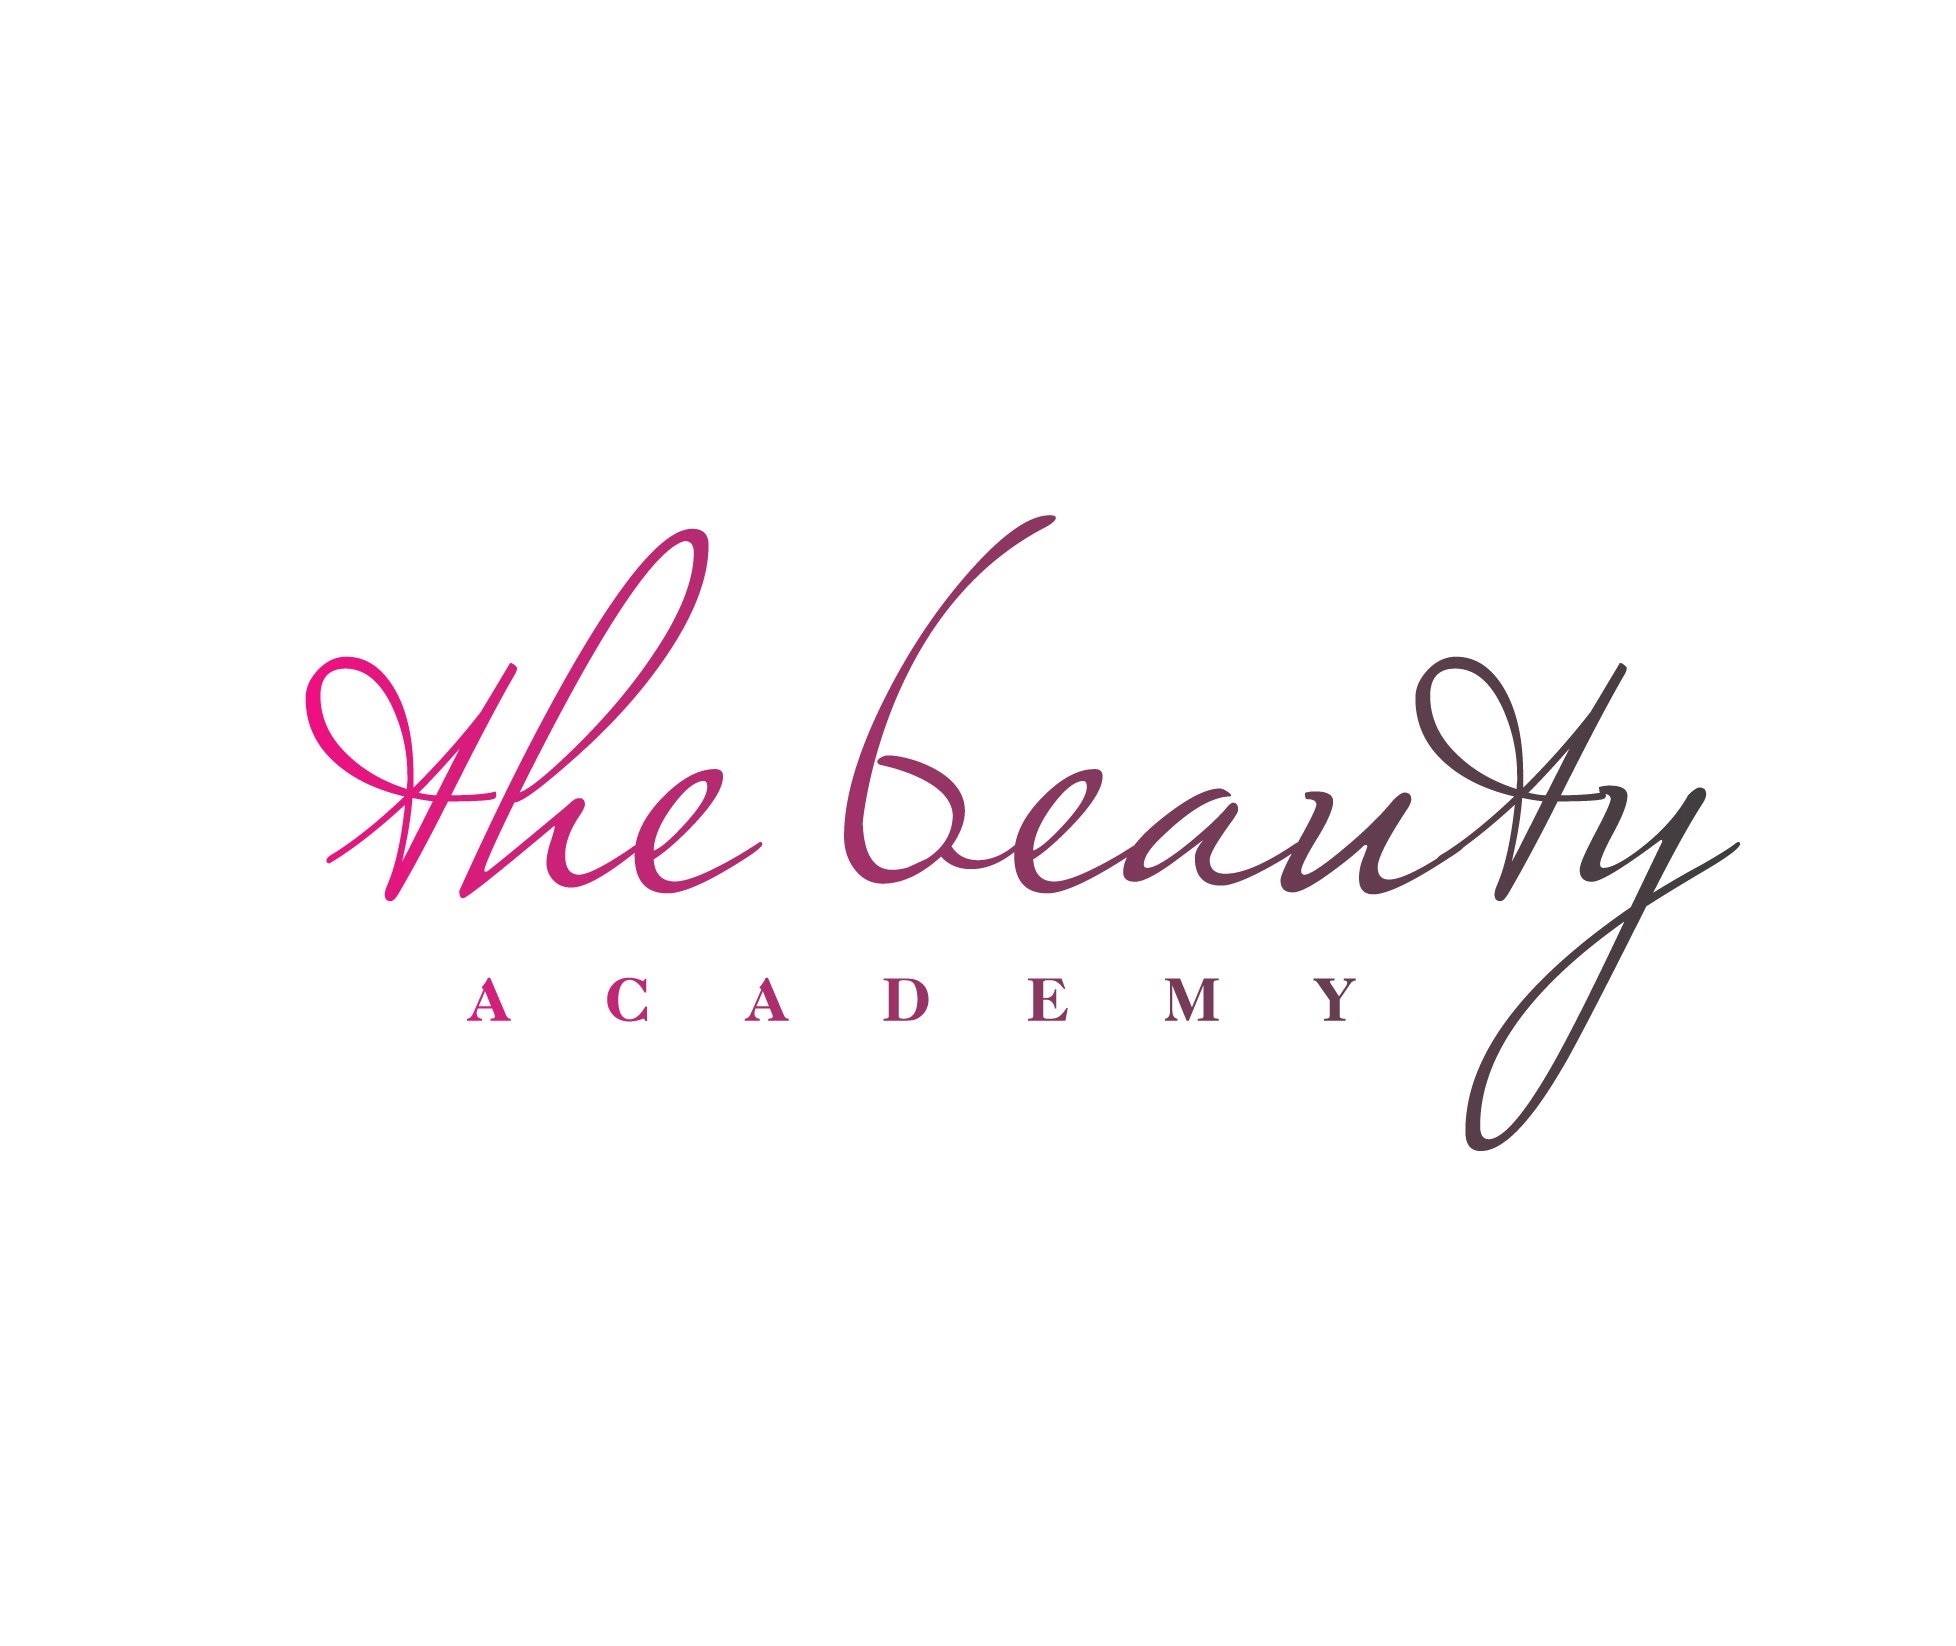 The Beauty Academy Logo